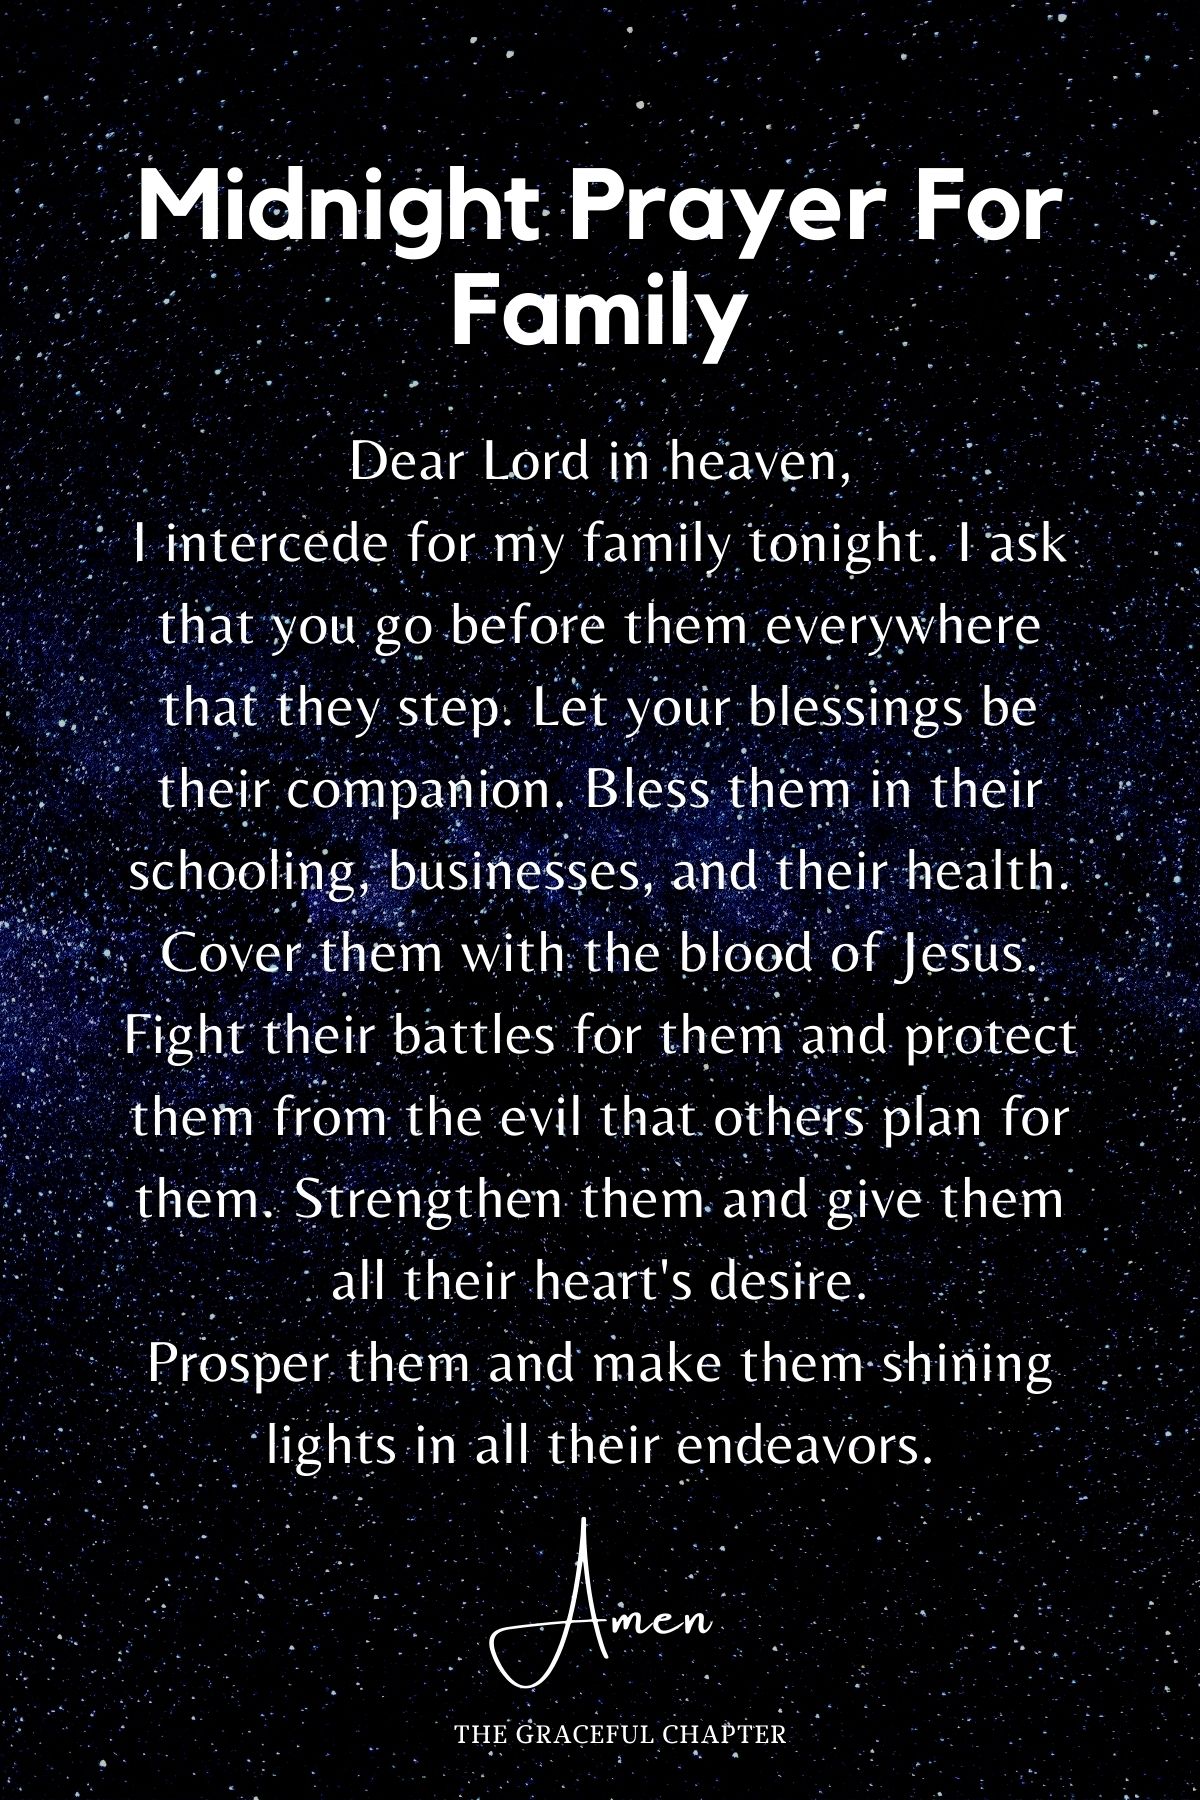 Midnight prayer for family